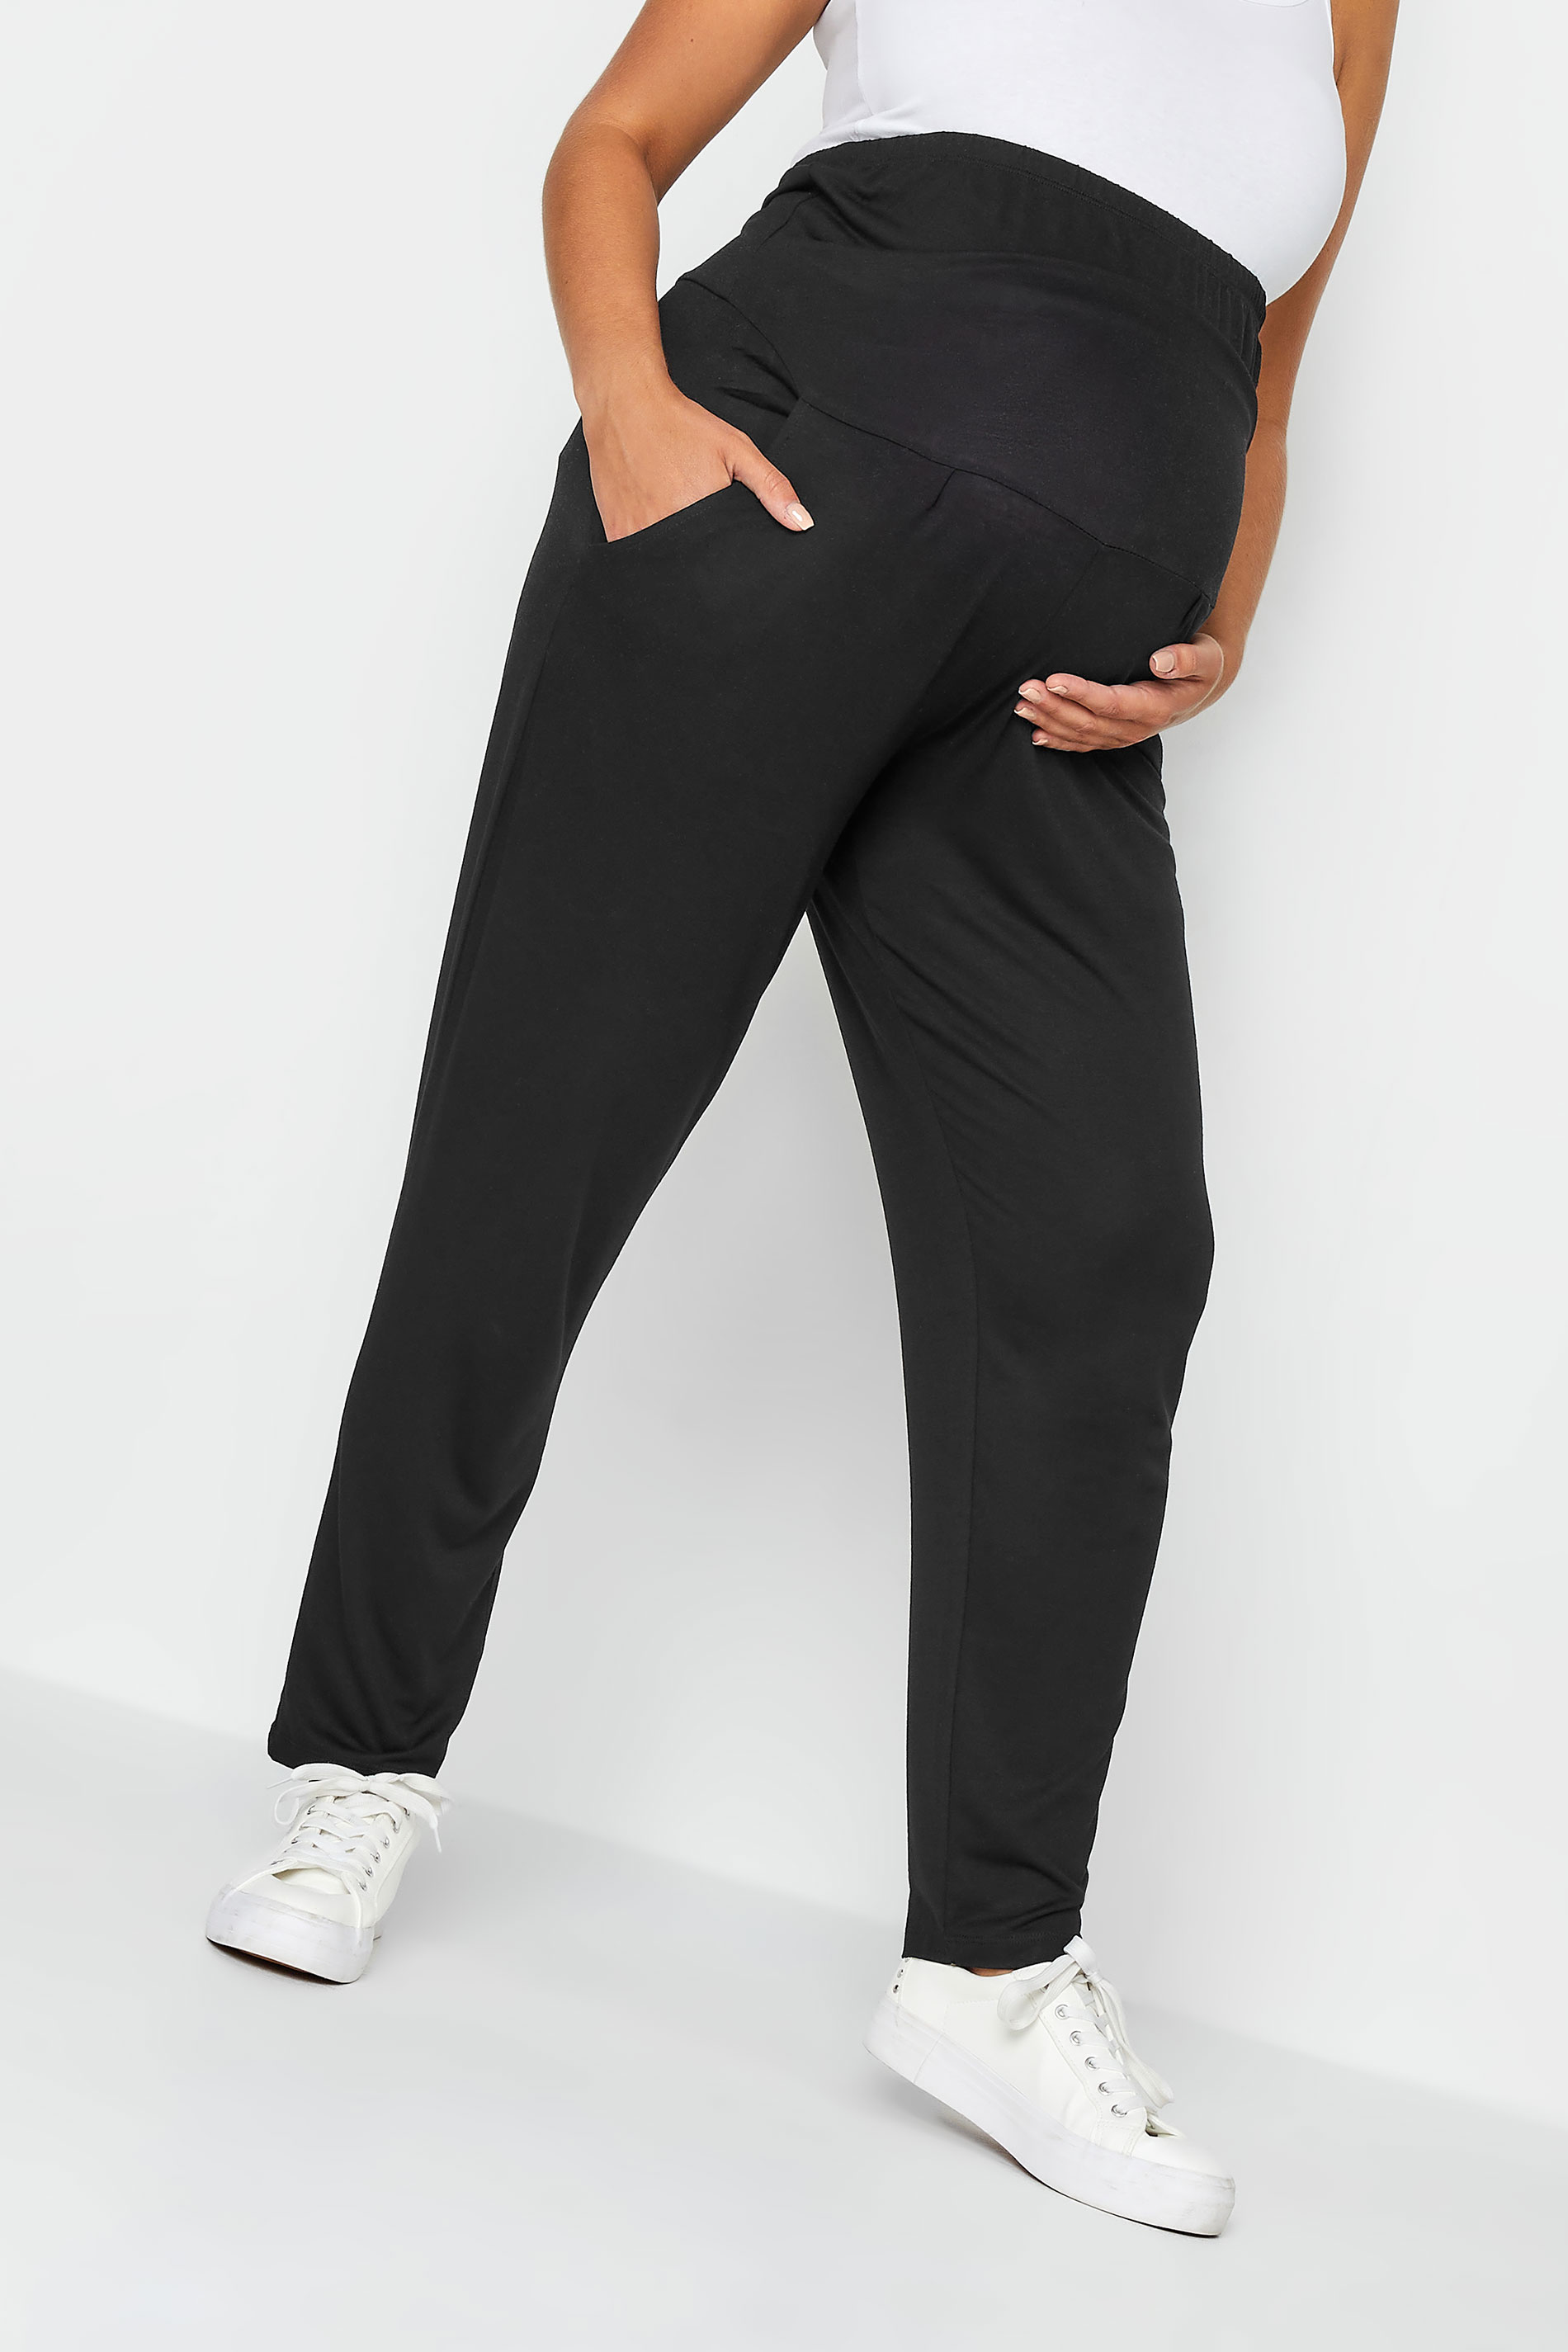 BUMP IT UP MATERNITY Curve Plus Size Black Harem Trousers | Yours Clothing  1